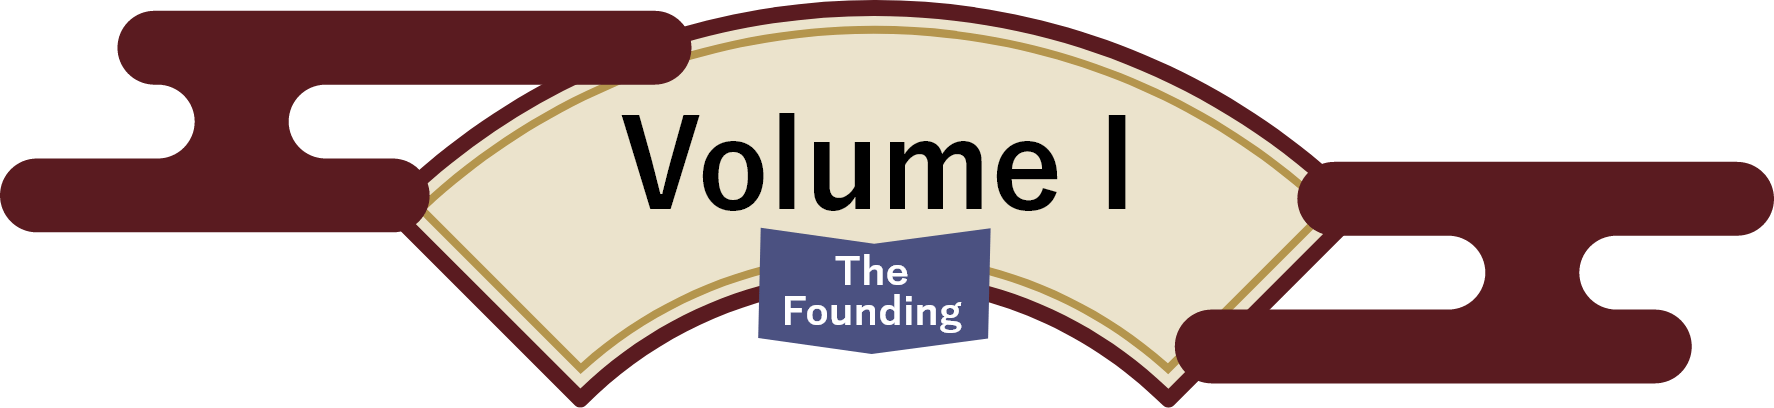 Volume I The Founding